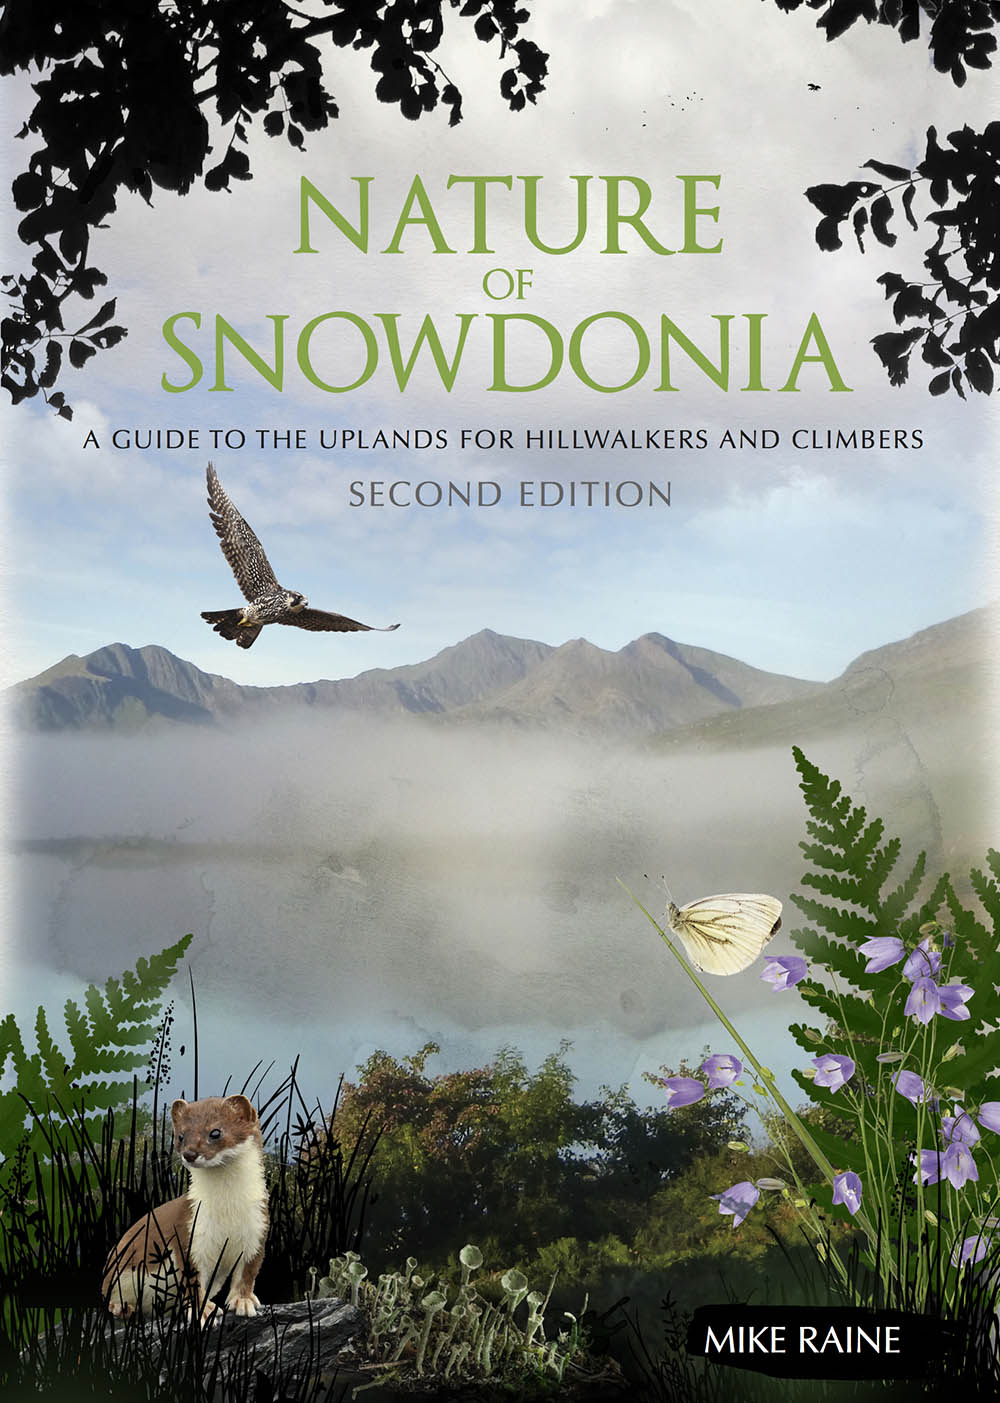 The Nature of Snowdonia